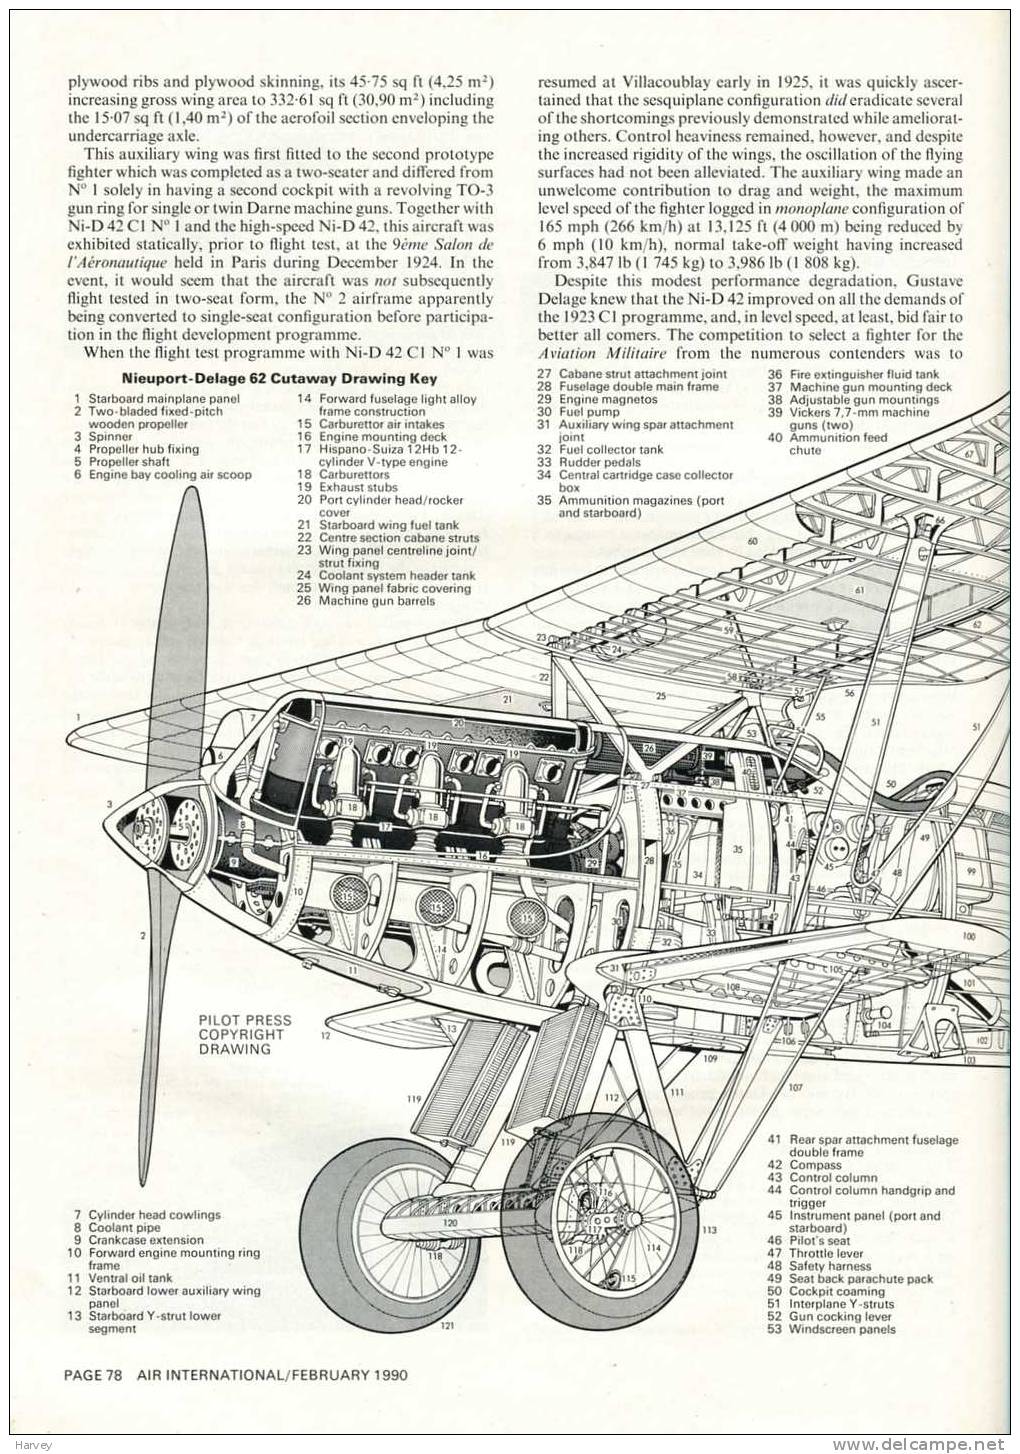 Air International Vol 38 N° 2 February 1990 - Transportes